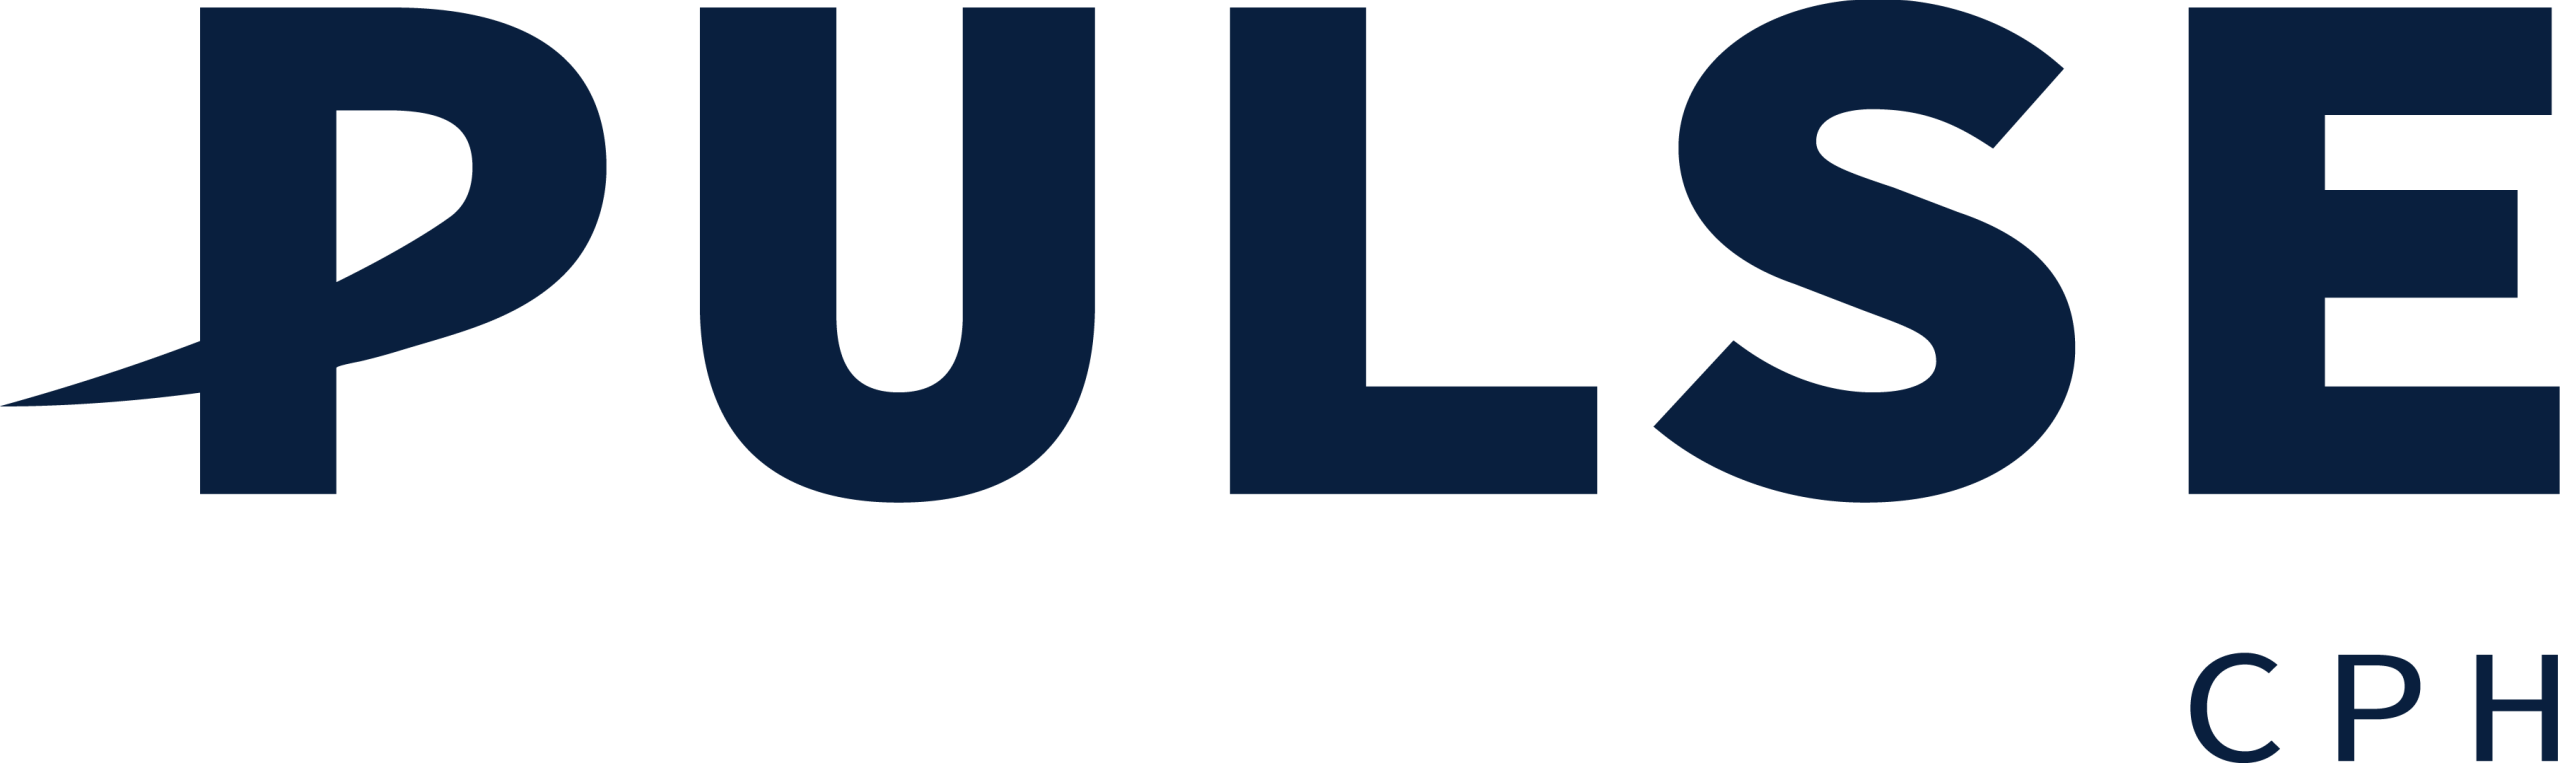 Pulsecph logo